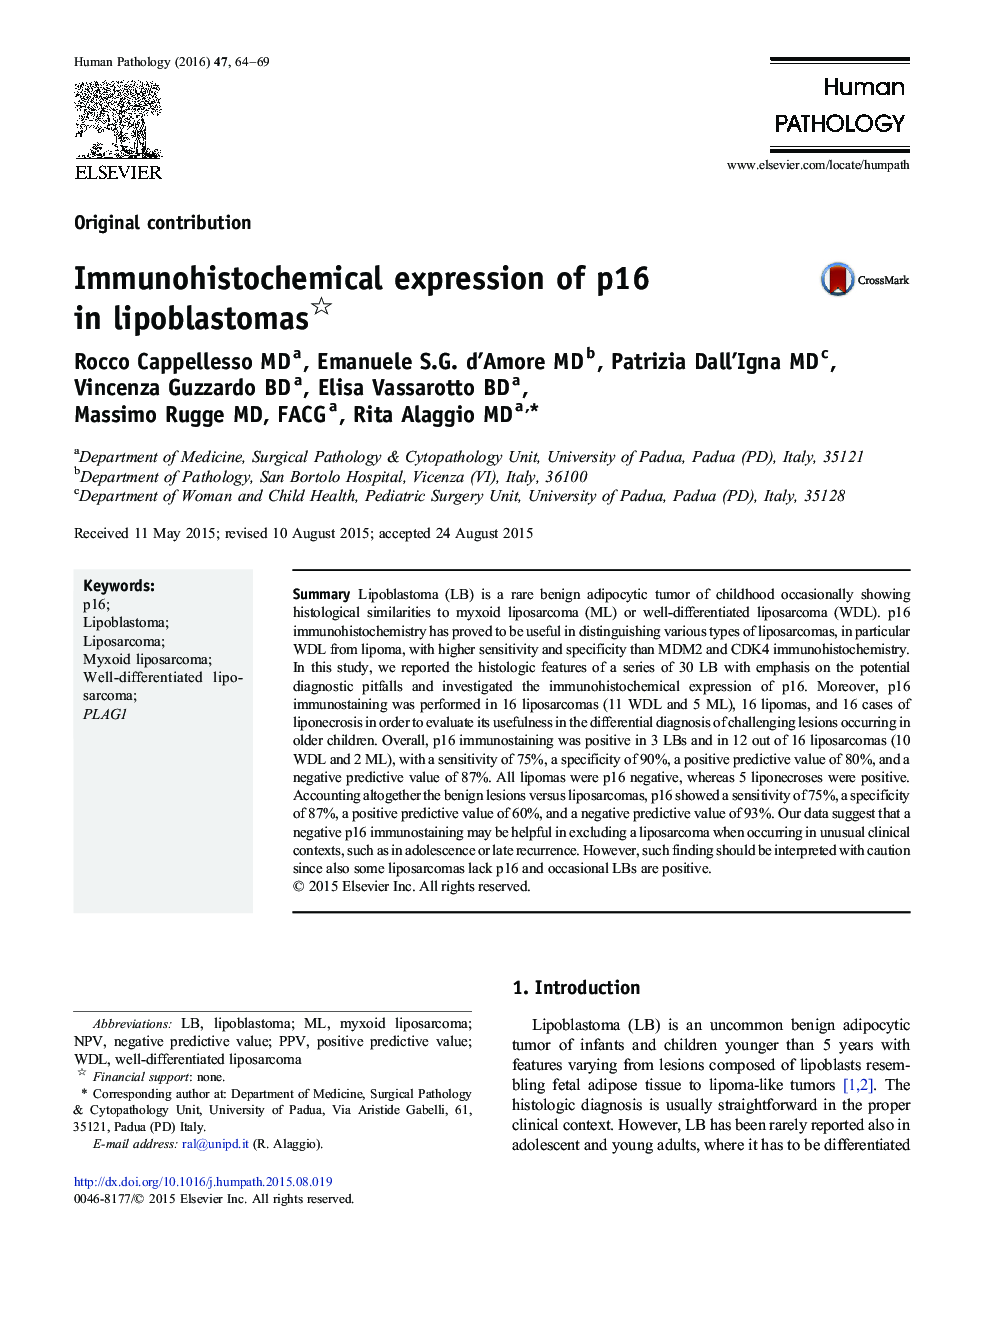 Immunohistochemical expression of p16 in lipoblastomas 